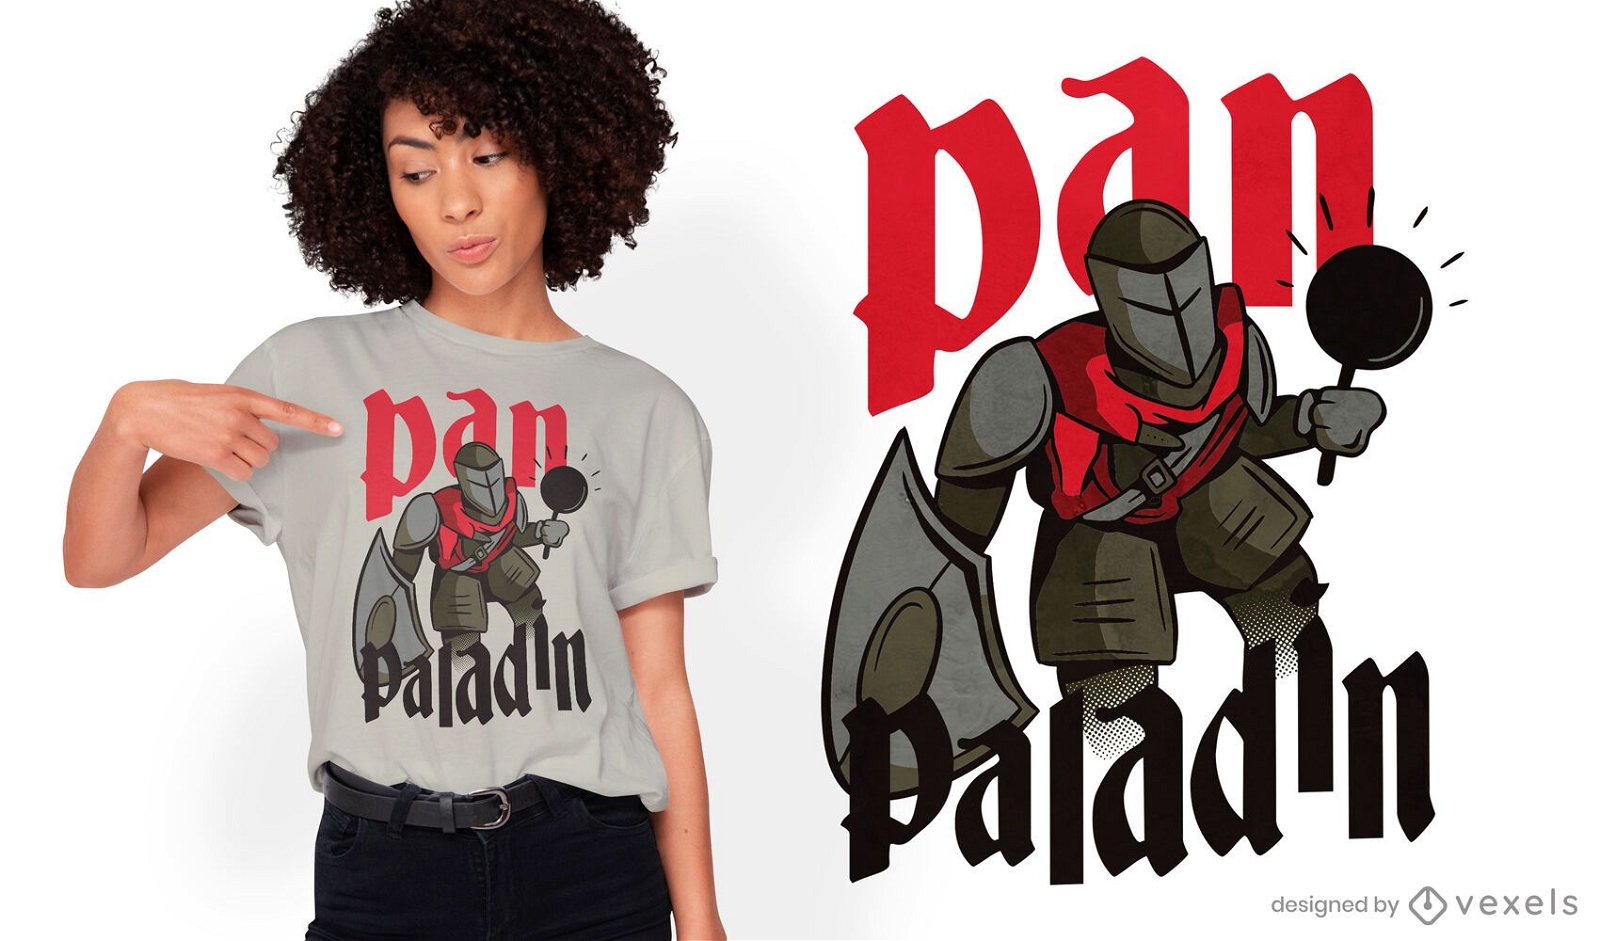 Paladin RPG character with pan t-shirt design